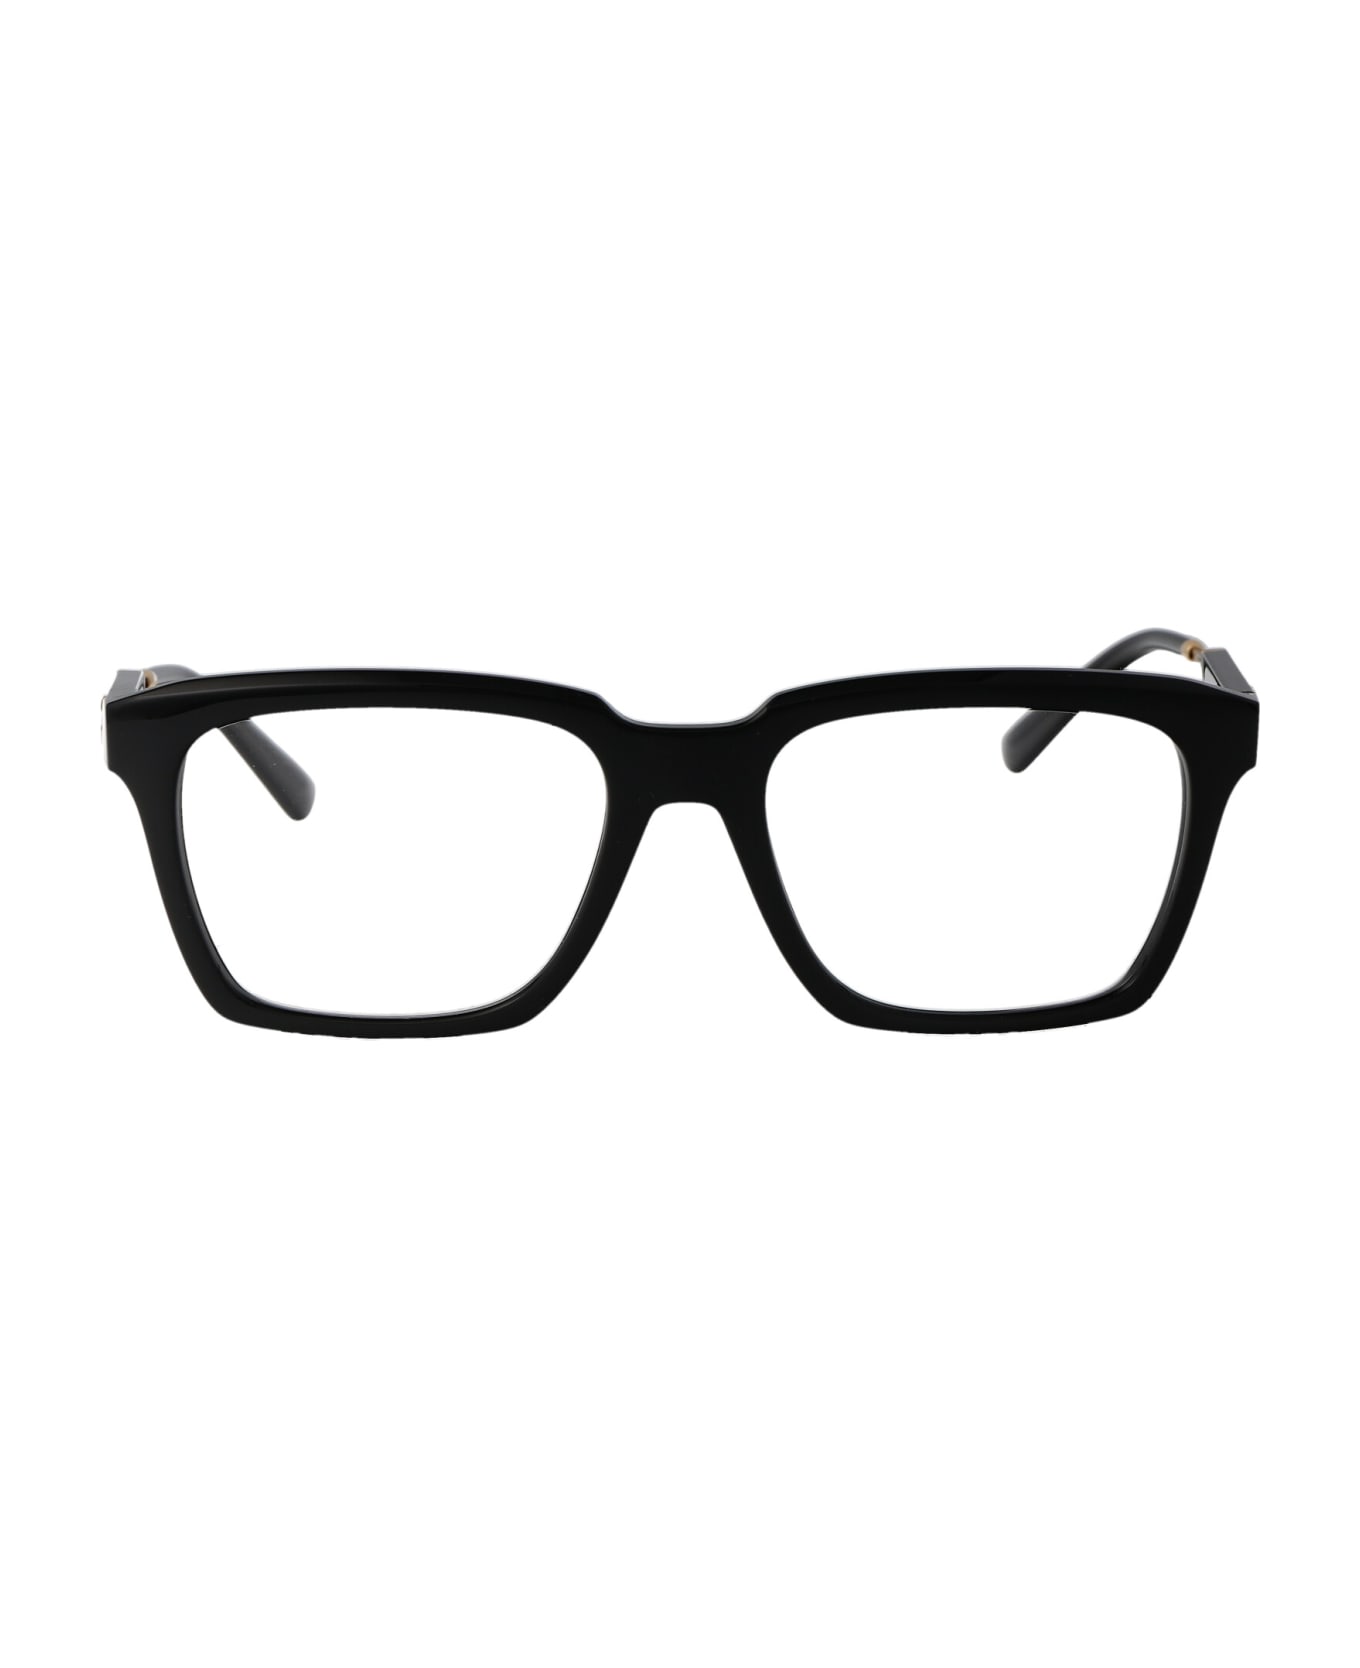 Dolce & Gabbana Eyewear 0dg5104 Glasses - 501 BLACK